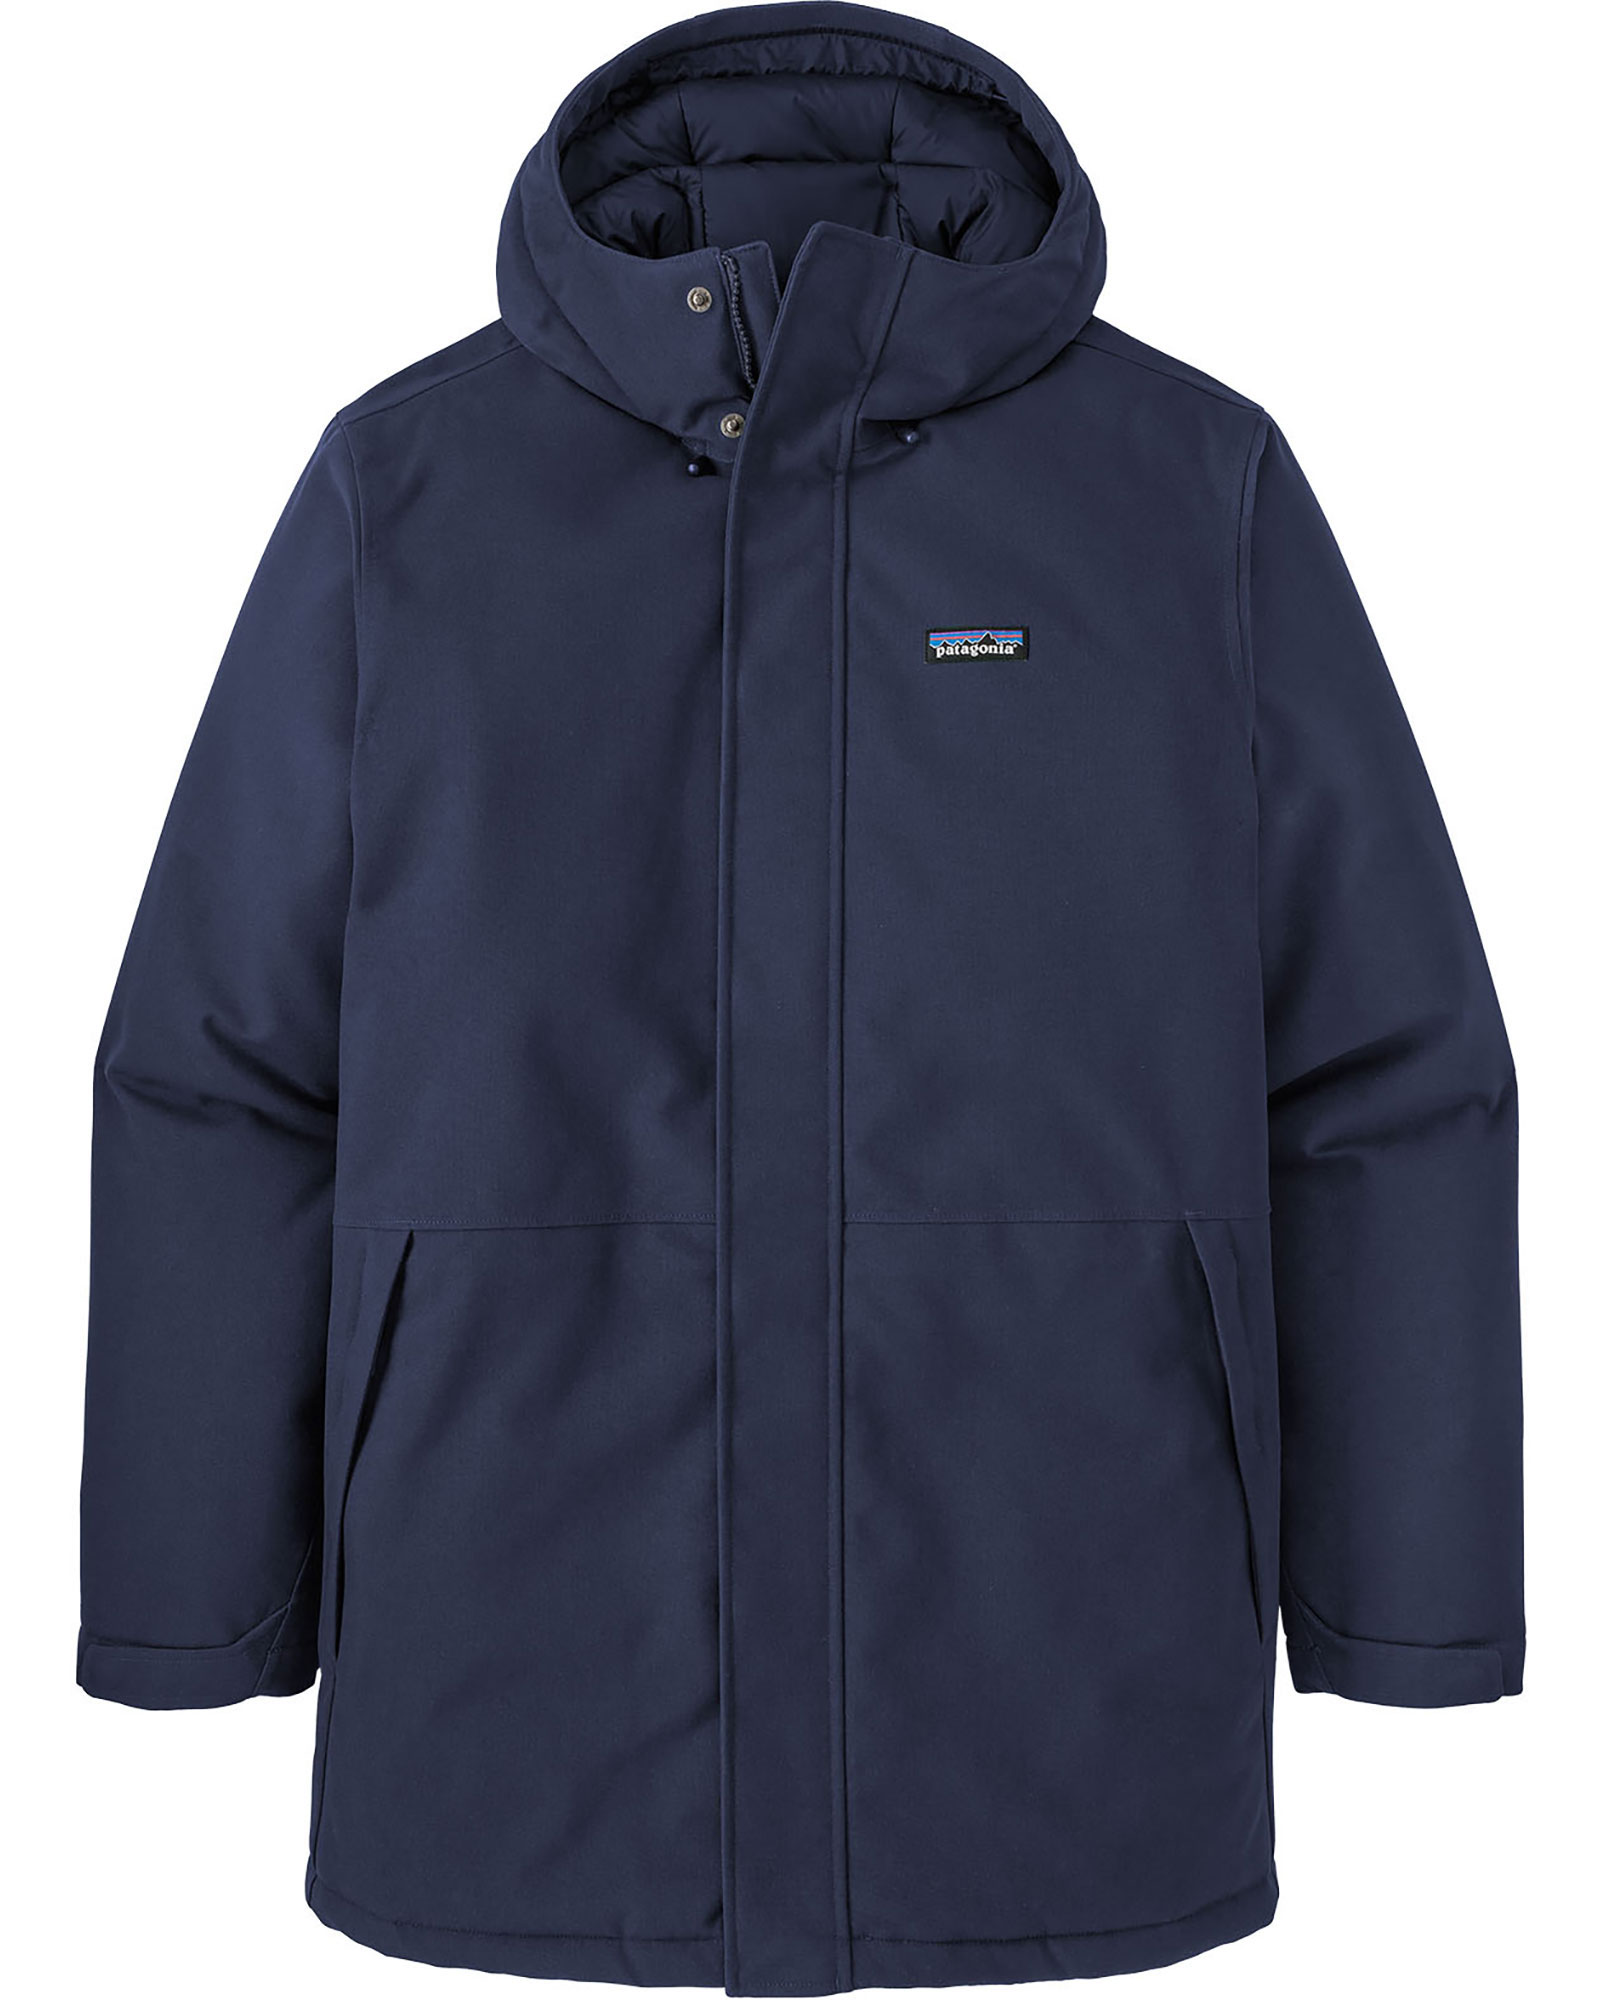 Patagonia Lone Mountain Men’s Parka Jacket - New Navy XL